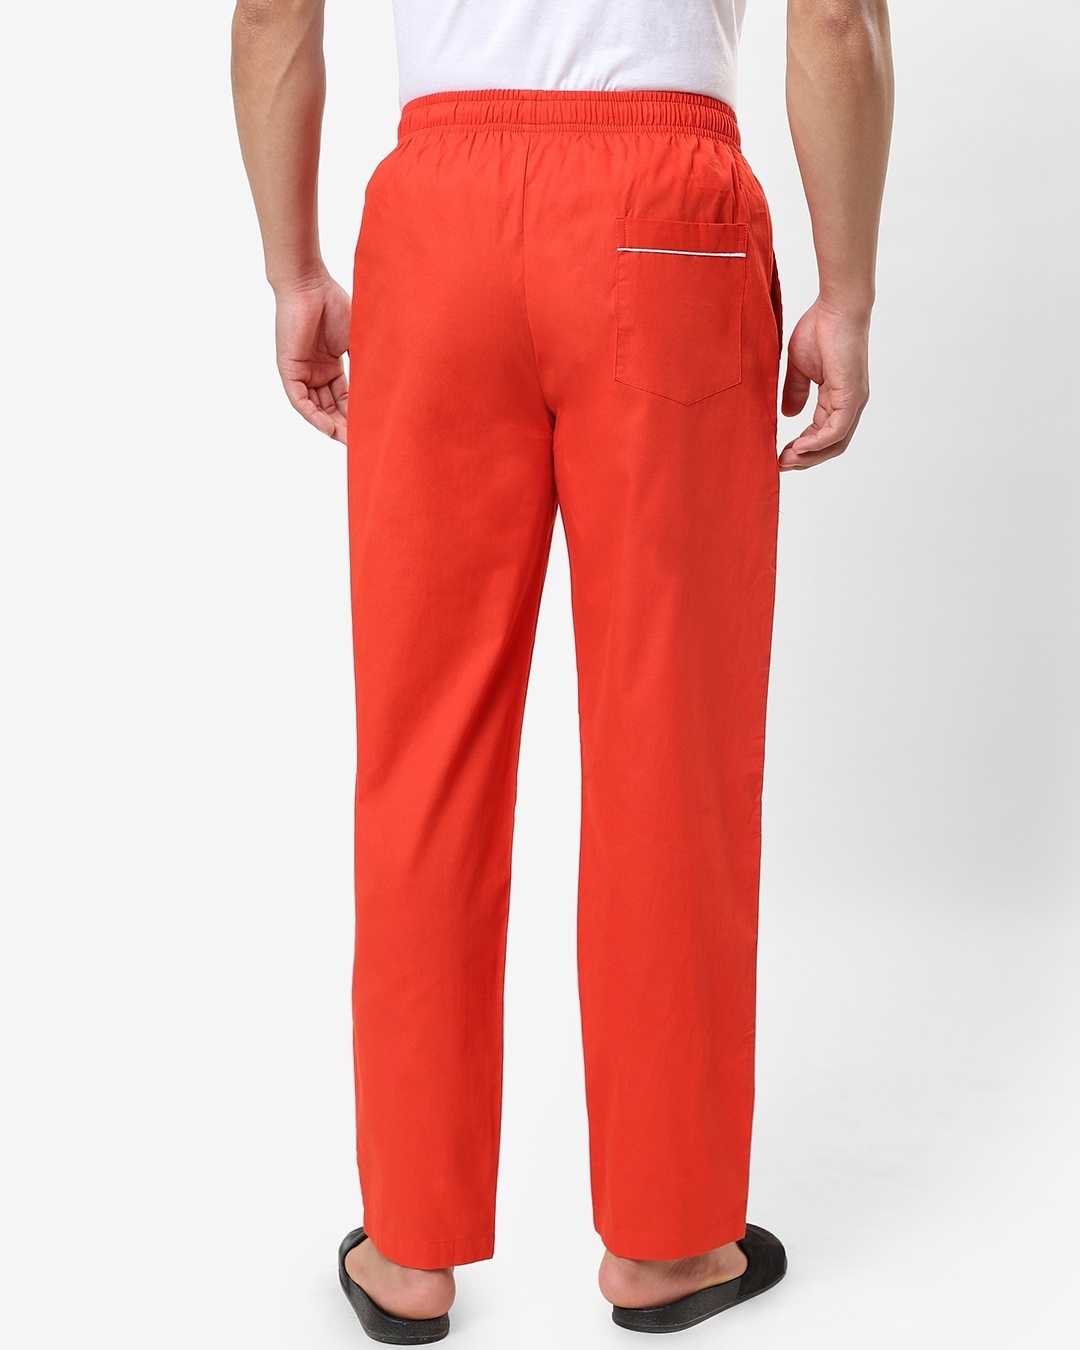 Shop Red Passion Plain Pyjama-Full